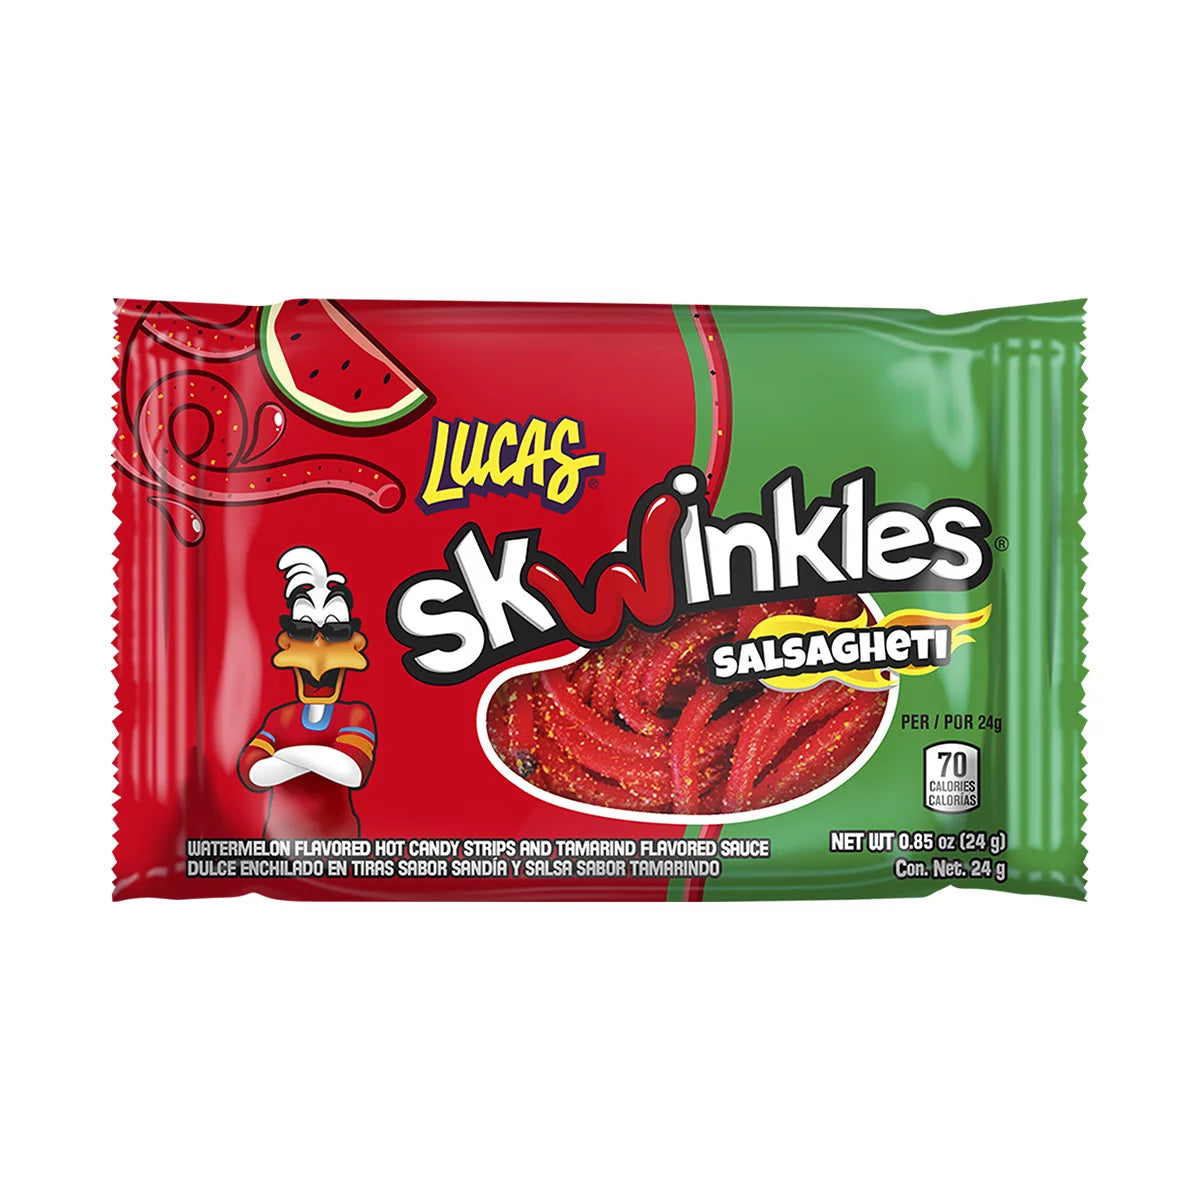 Lucas Skwinkles Salsagheti Watermelon (Mexican)